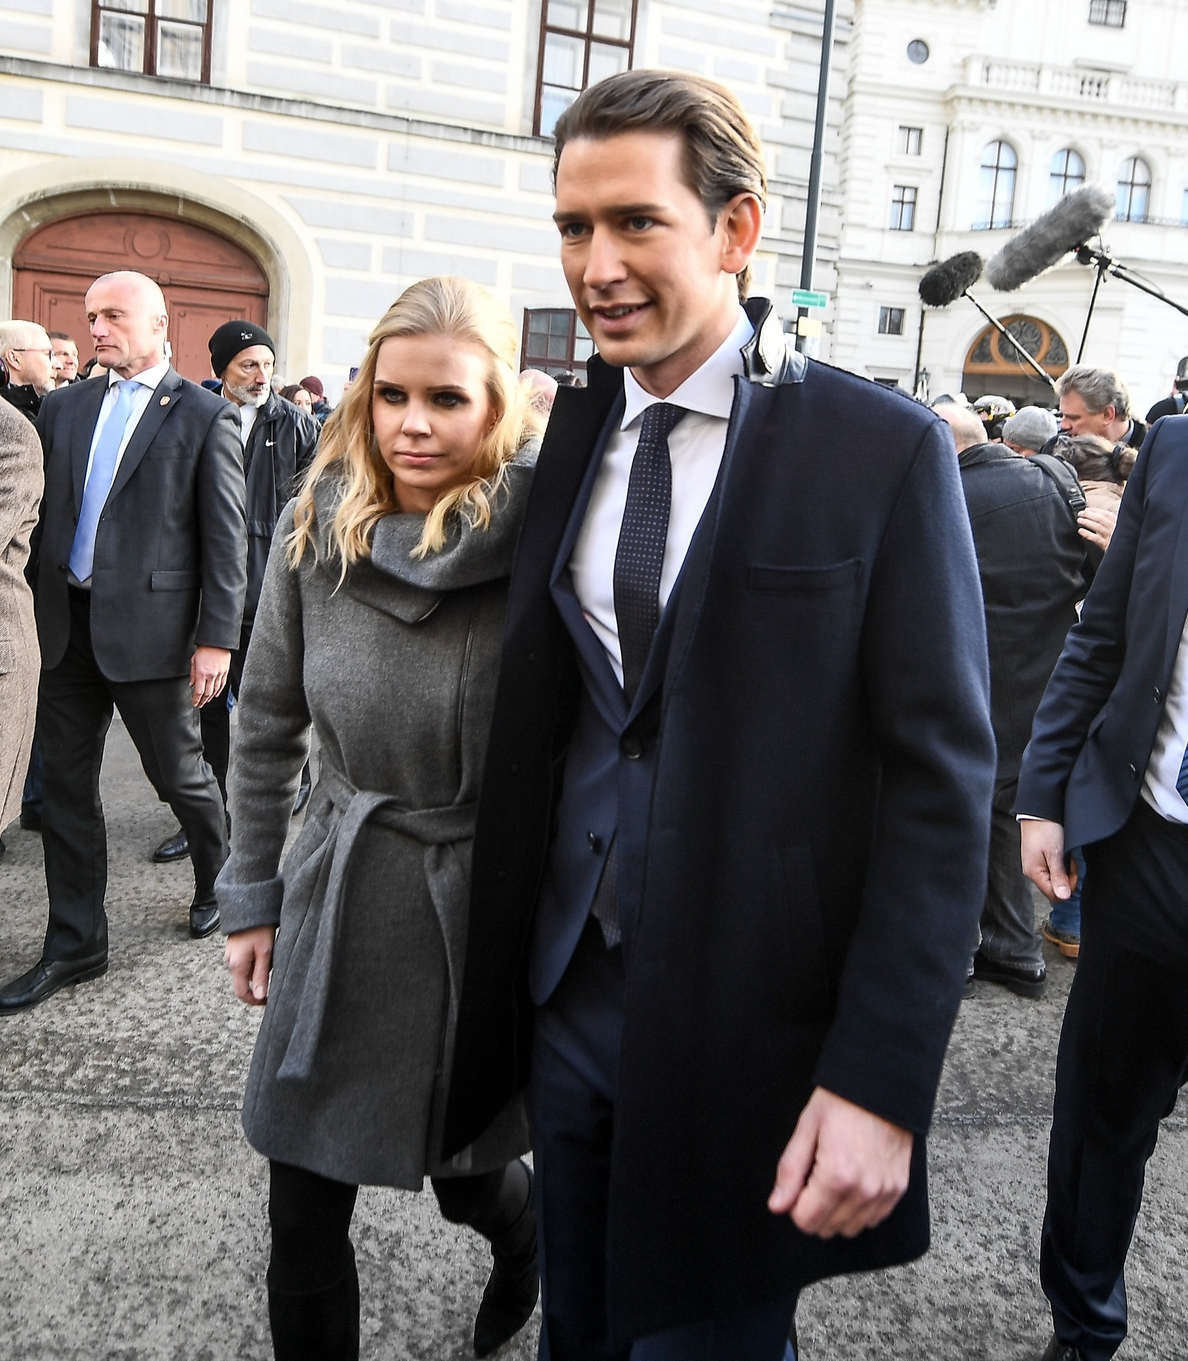 Sebastian Kurz viaja a Bruselas para confirmar la línea europeísta del Gobierno austríaco